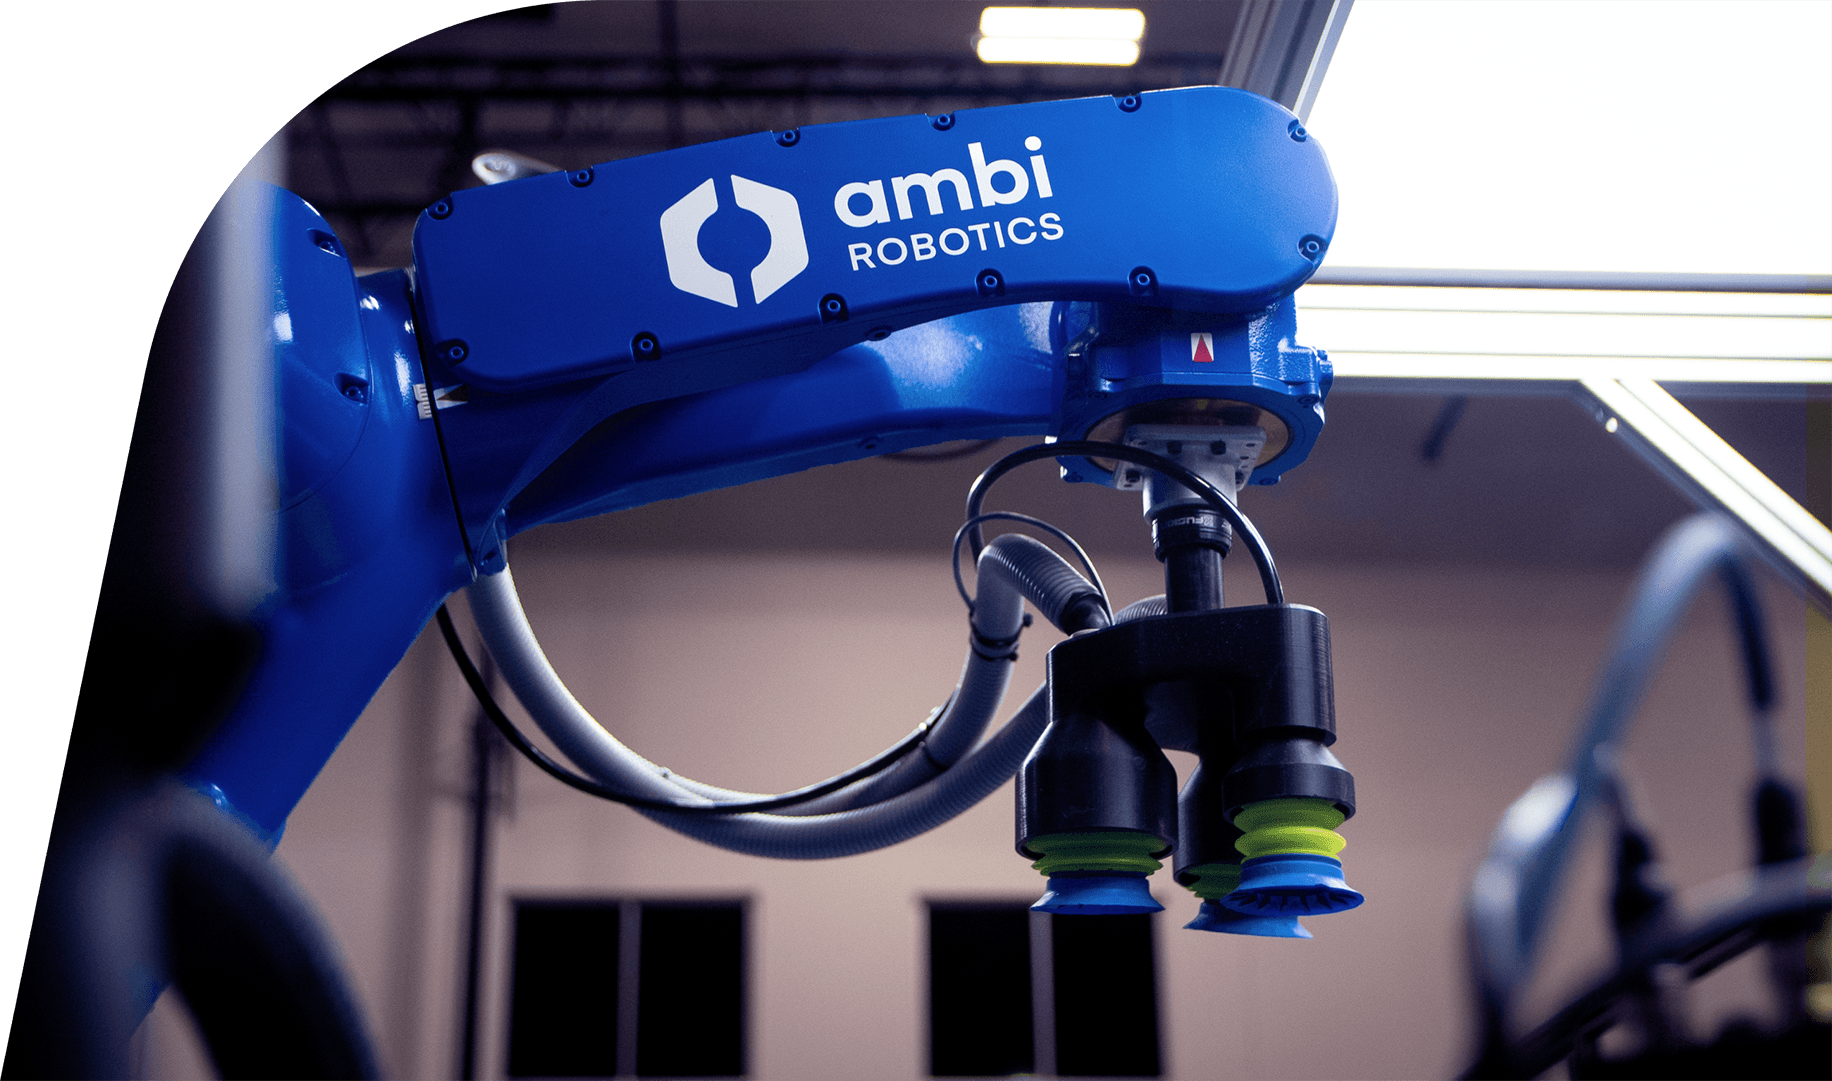 Ambi Robotics: New logo design on AmbiSort robot arm